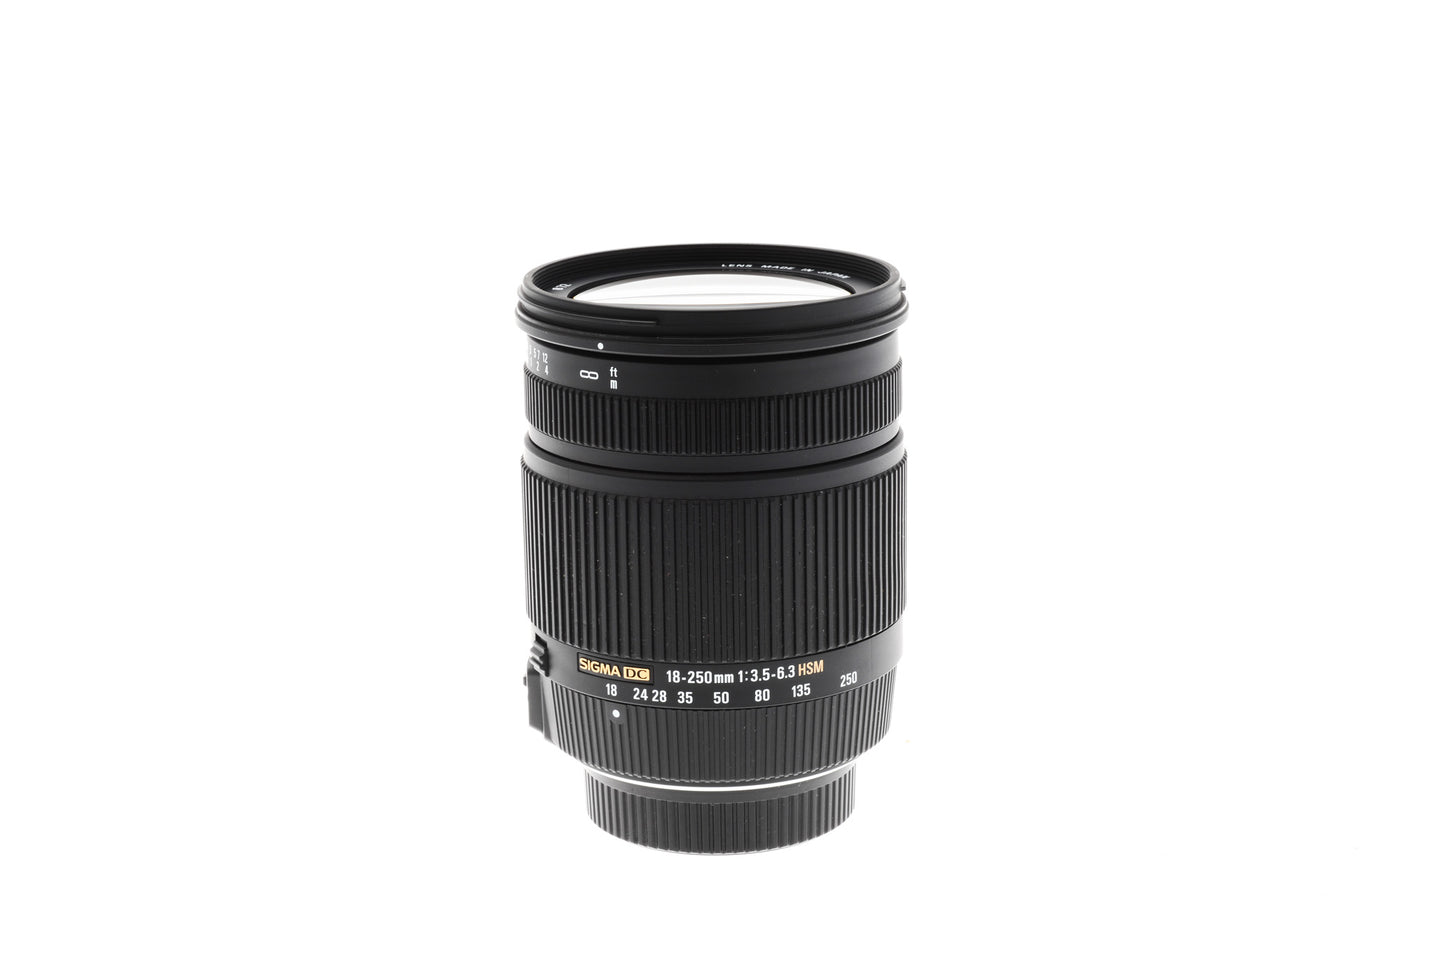 Sigma 18-250mm f3.5-6.3 DC OS HSM - Lens